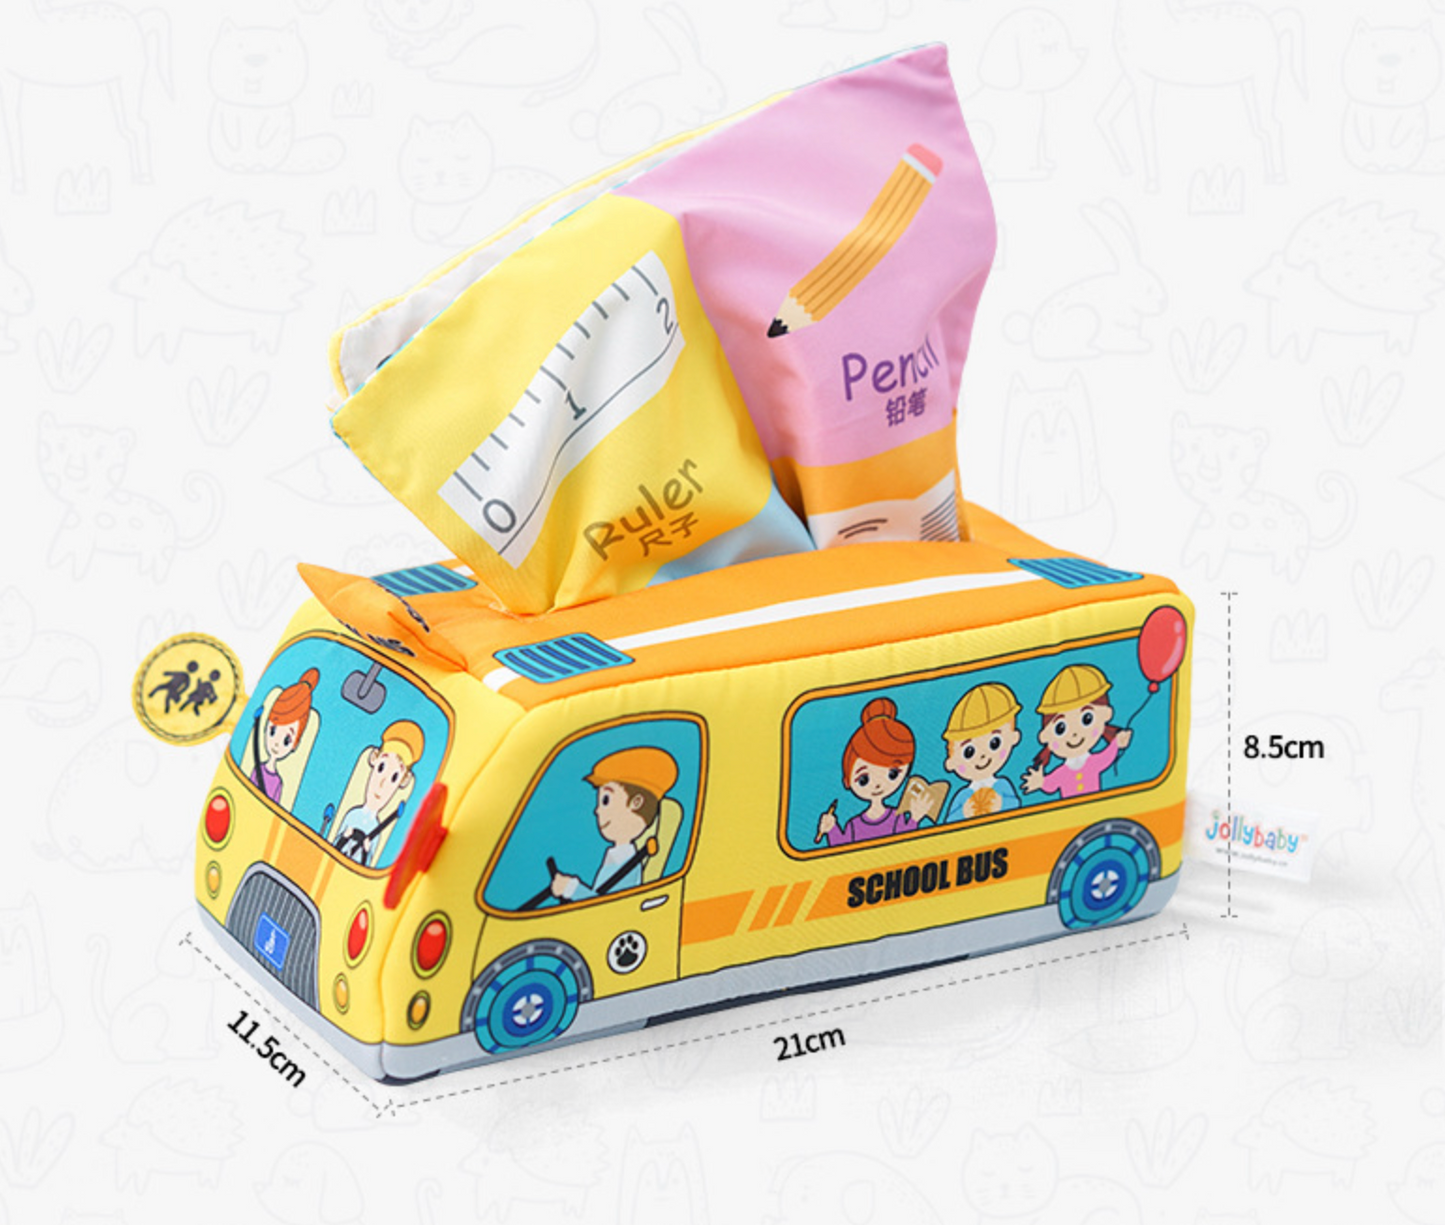 Jollybaby School Bus Tissue Box